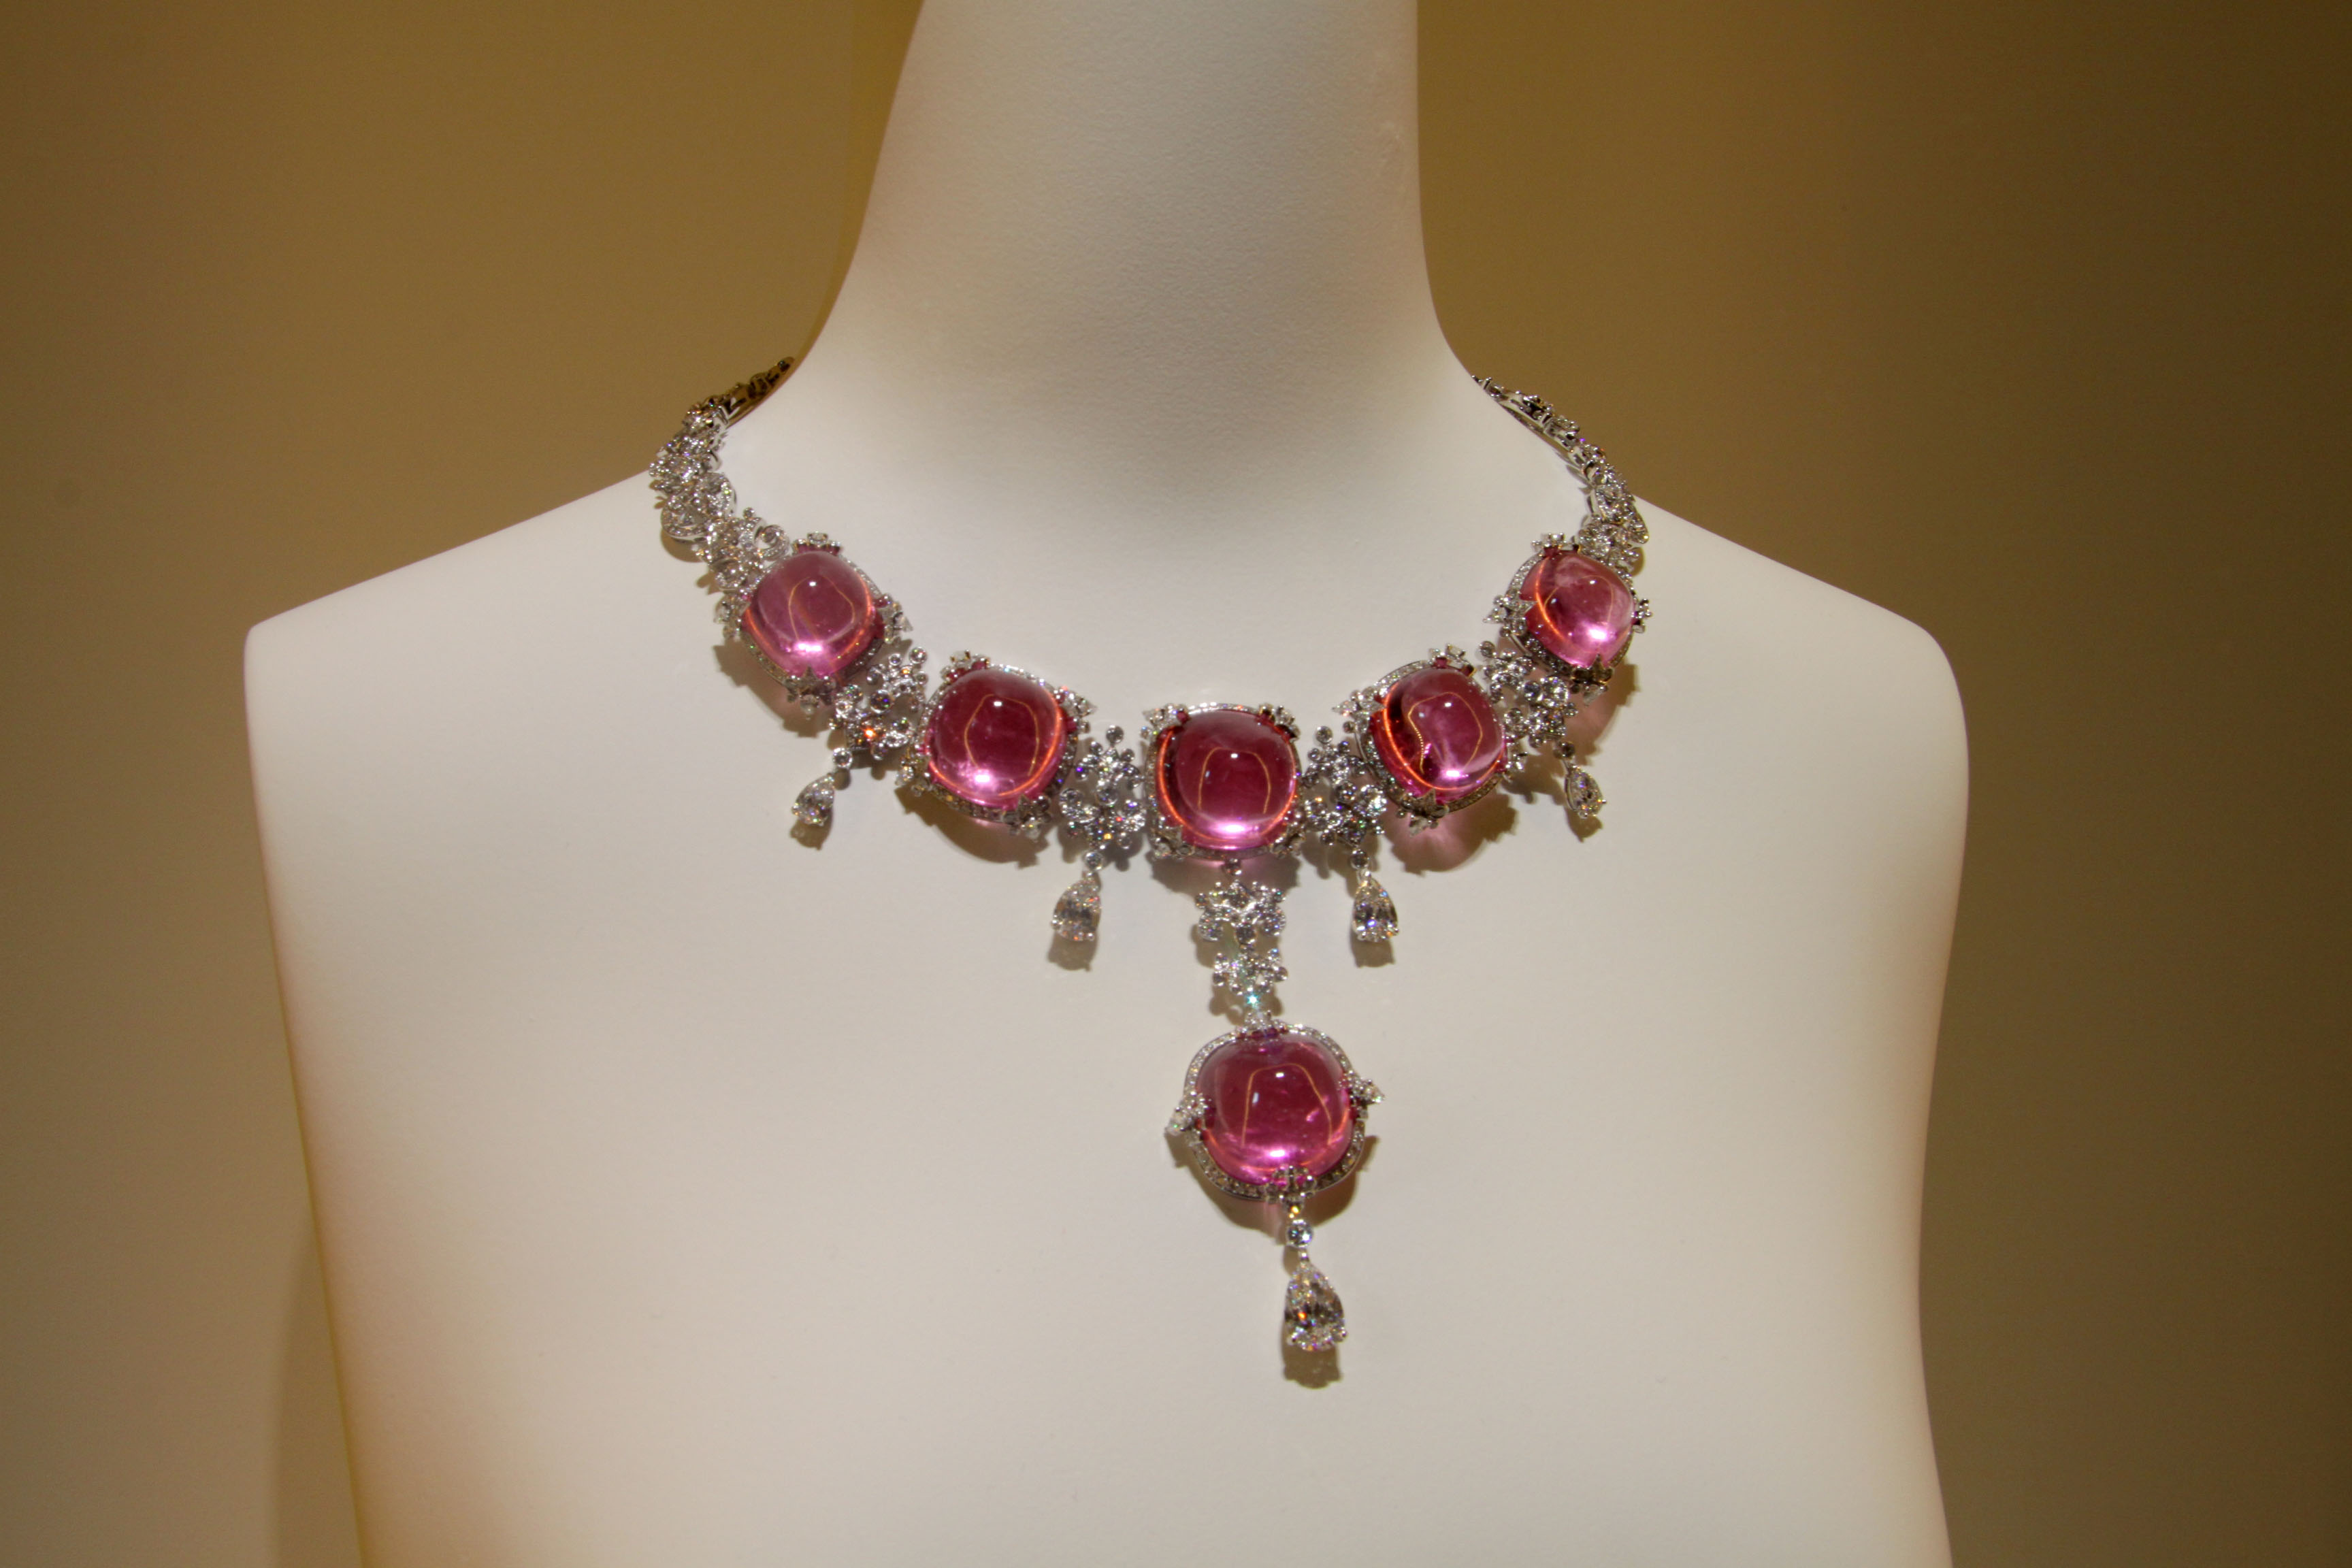 Necklace featuring tourmaline cabochons with diamonds, Giampiero Bodino